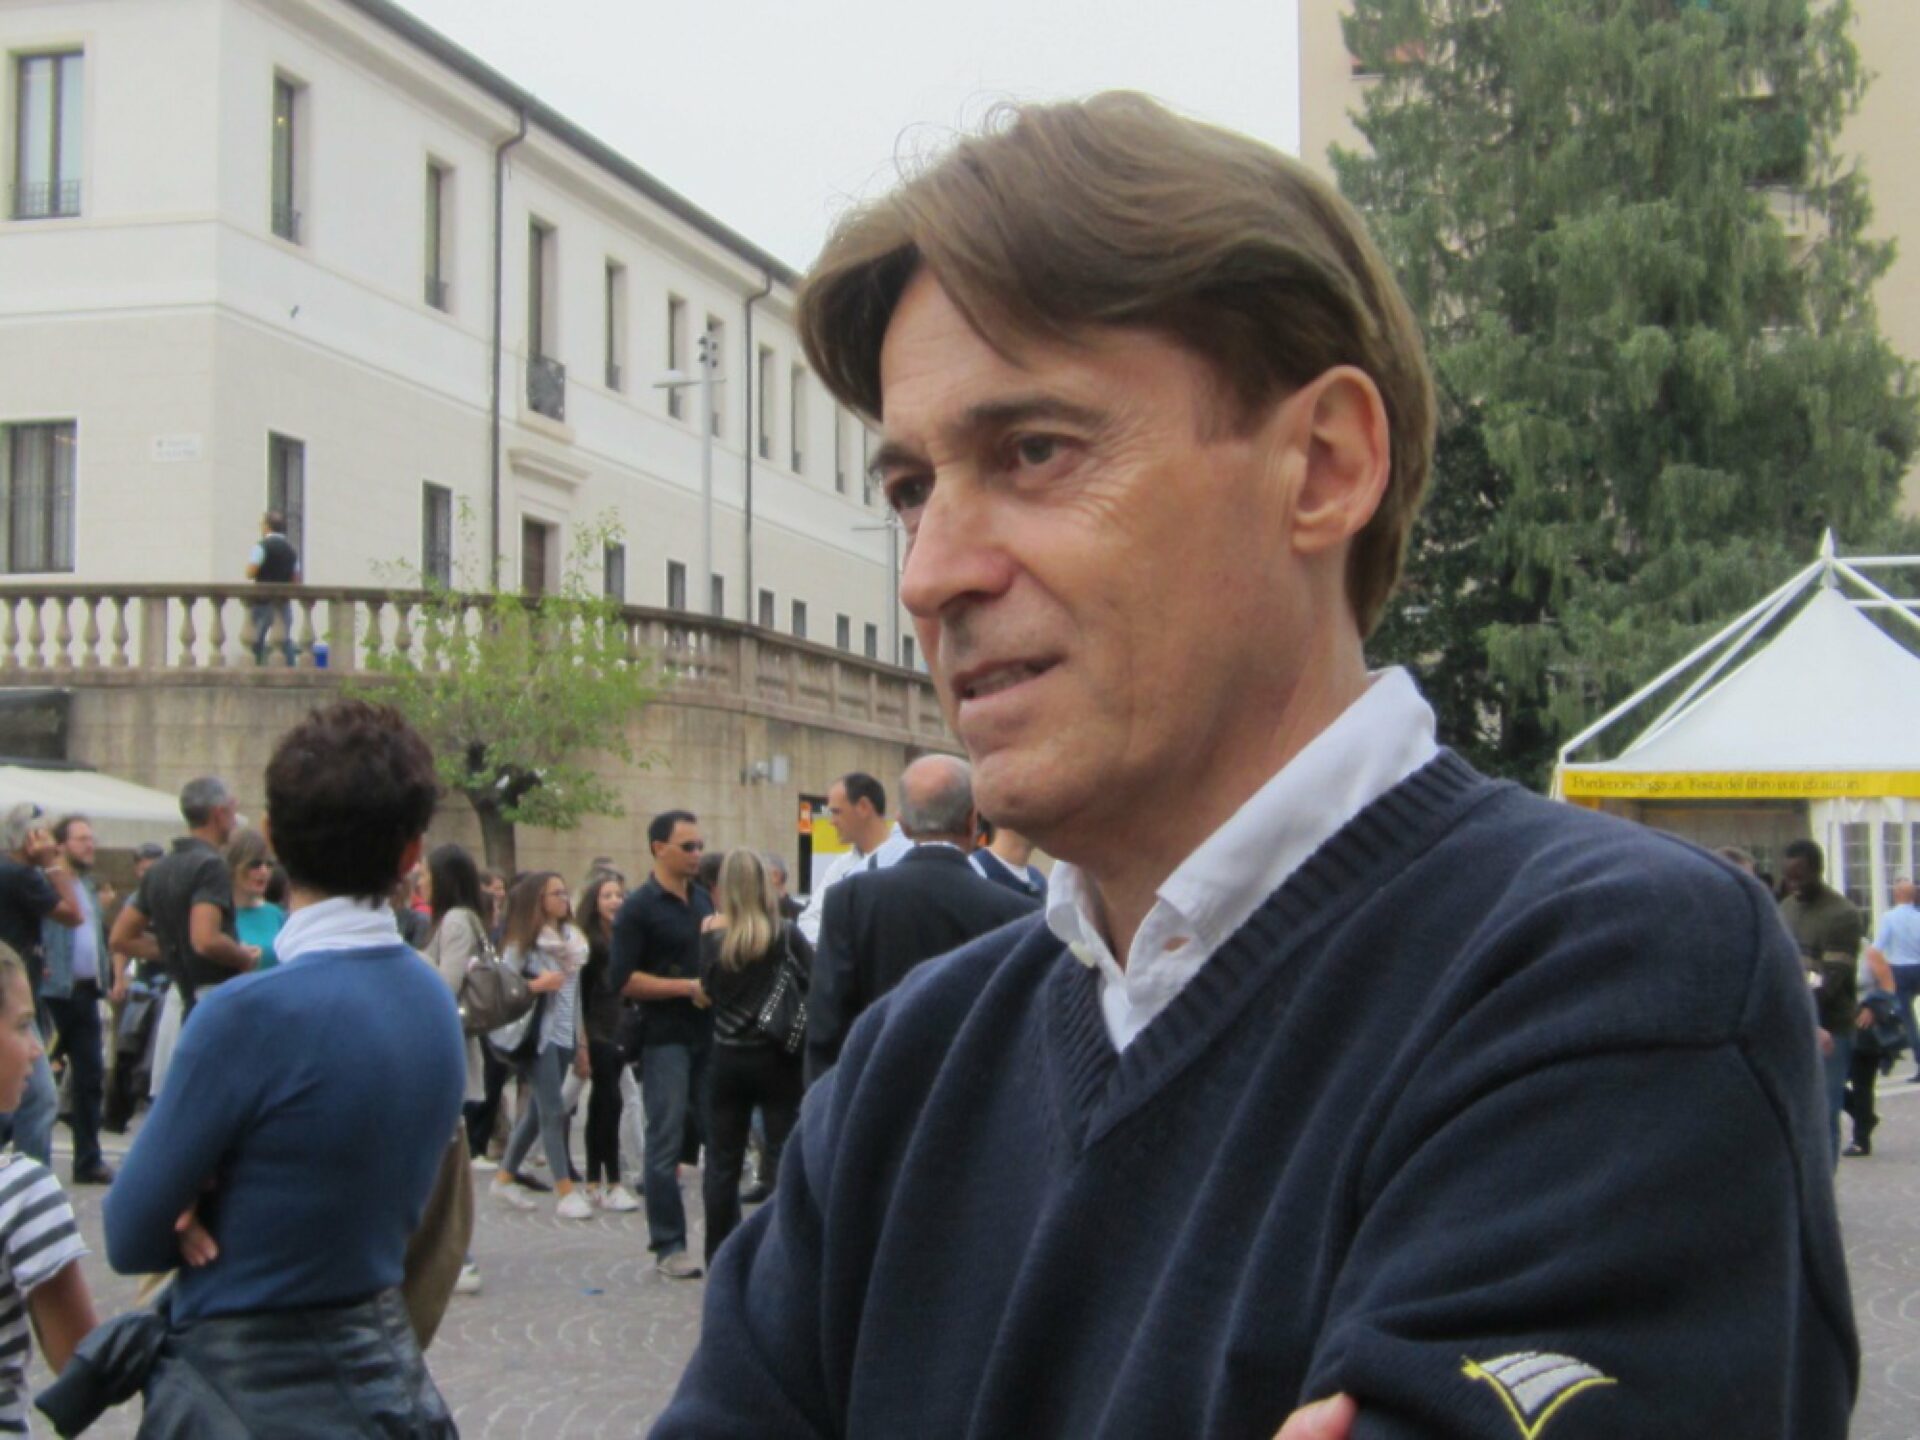 dott. Luca Biancolin